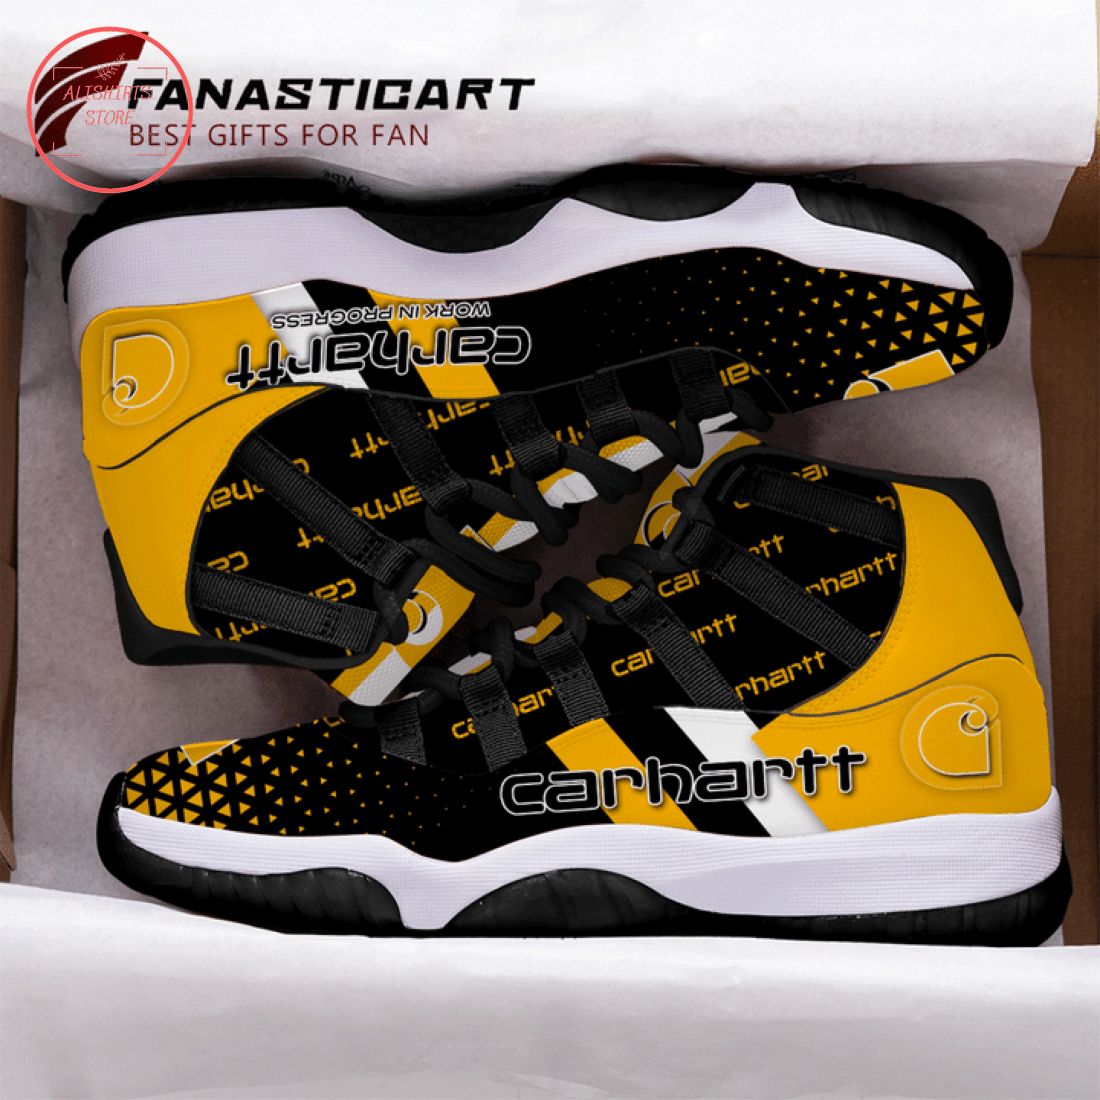 Carhartt Work in Progress Air Jordan 11 Sneaker Shoes